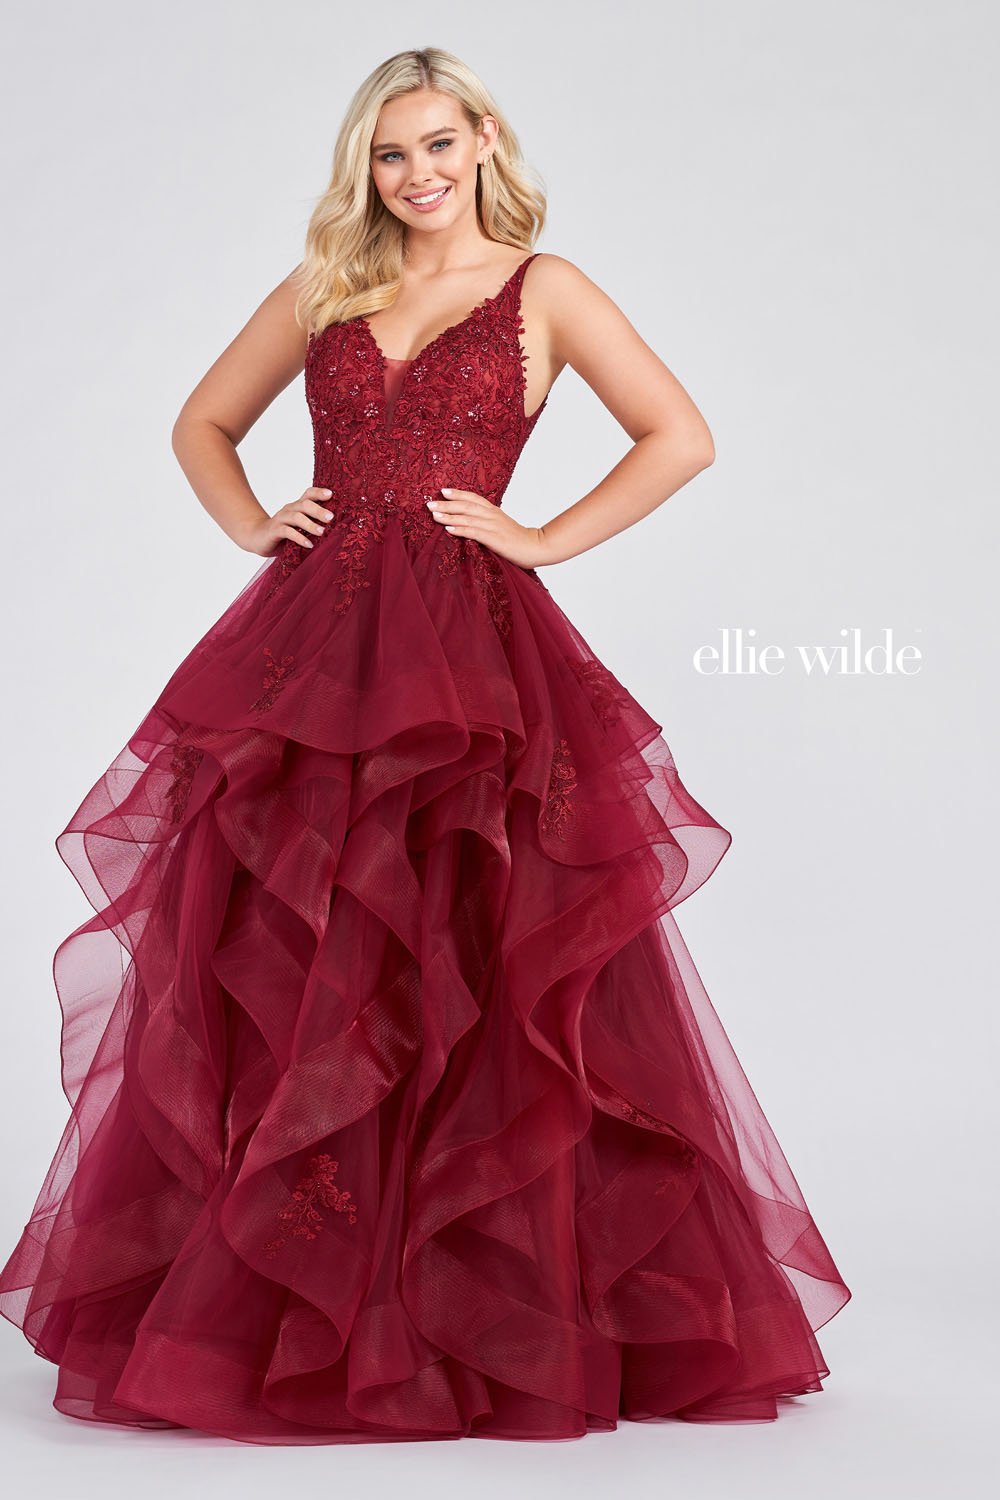 Ellie Wilde Wine EW122080 Prom Dress Image.  Wine formal dress.